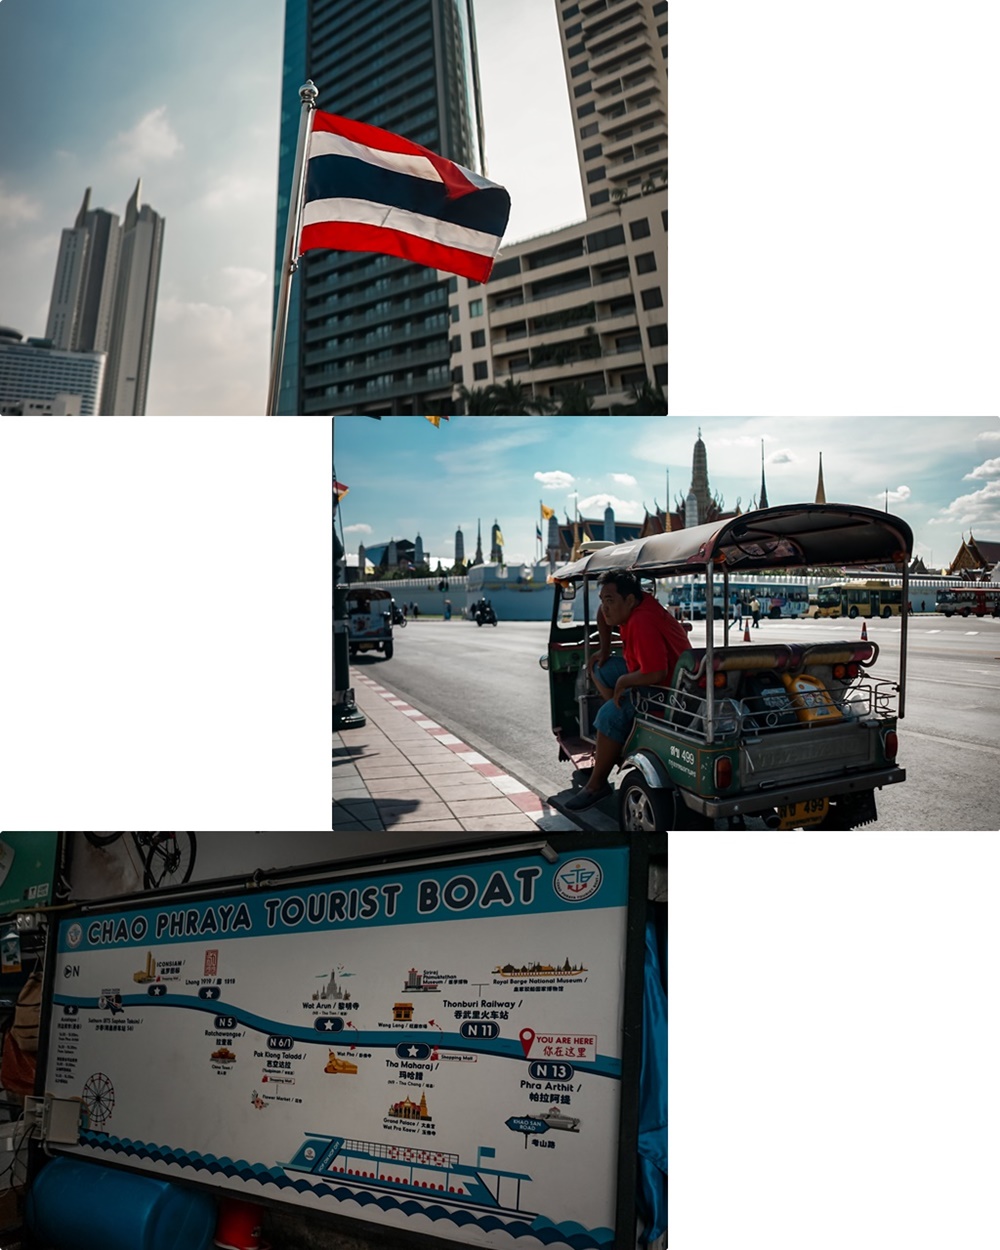 Thailand Flagge, Tuk Tuk in Bangkok & Chao Phraya Tourist Boat Karte